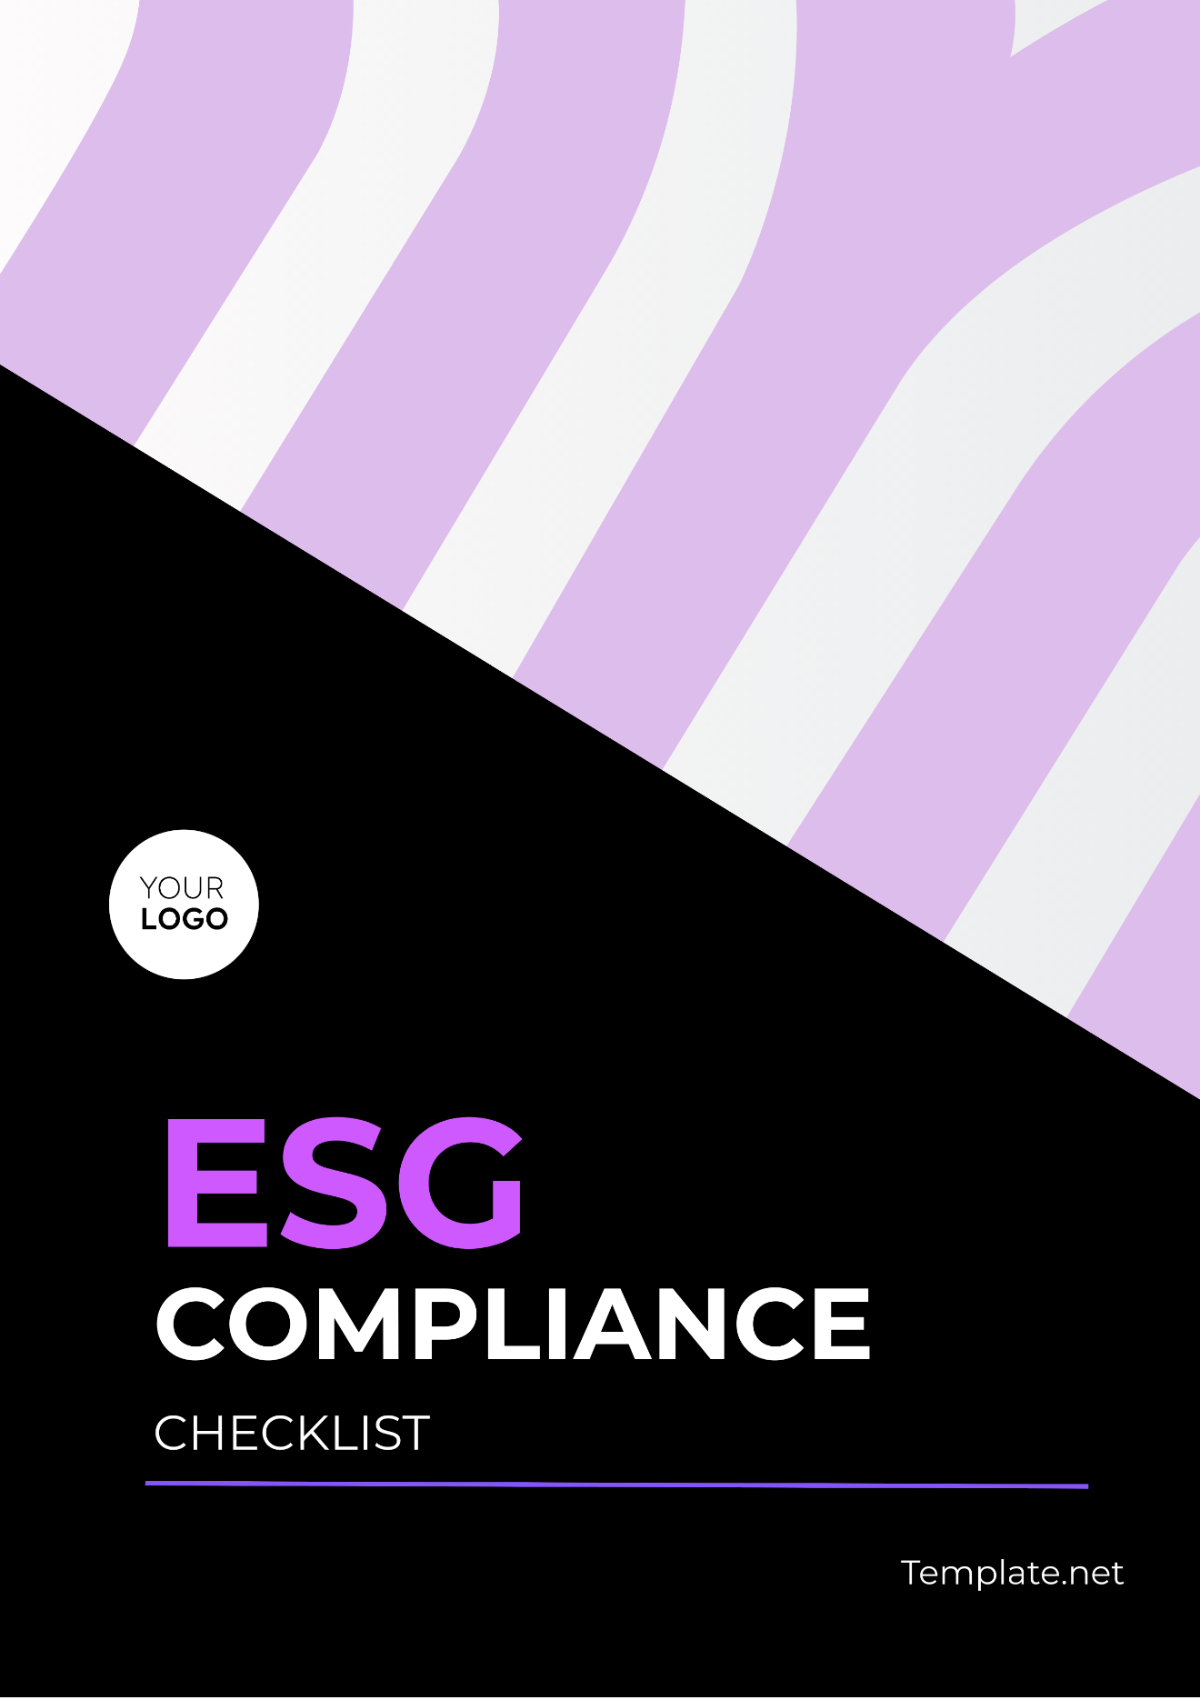 ESG Compliance Checklist Template